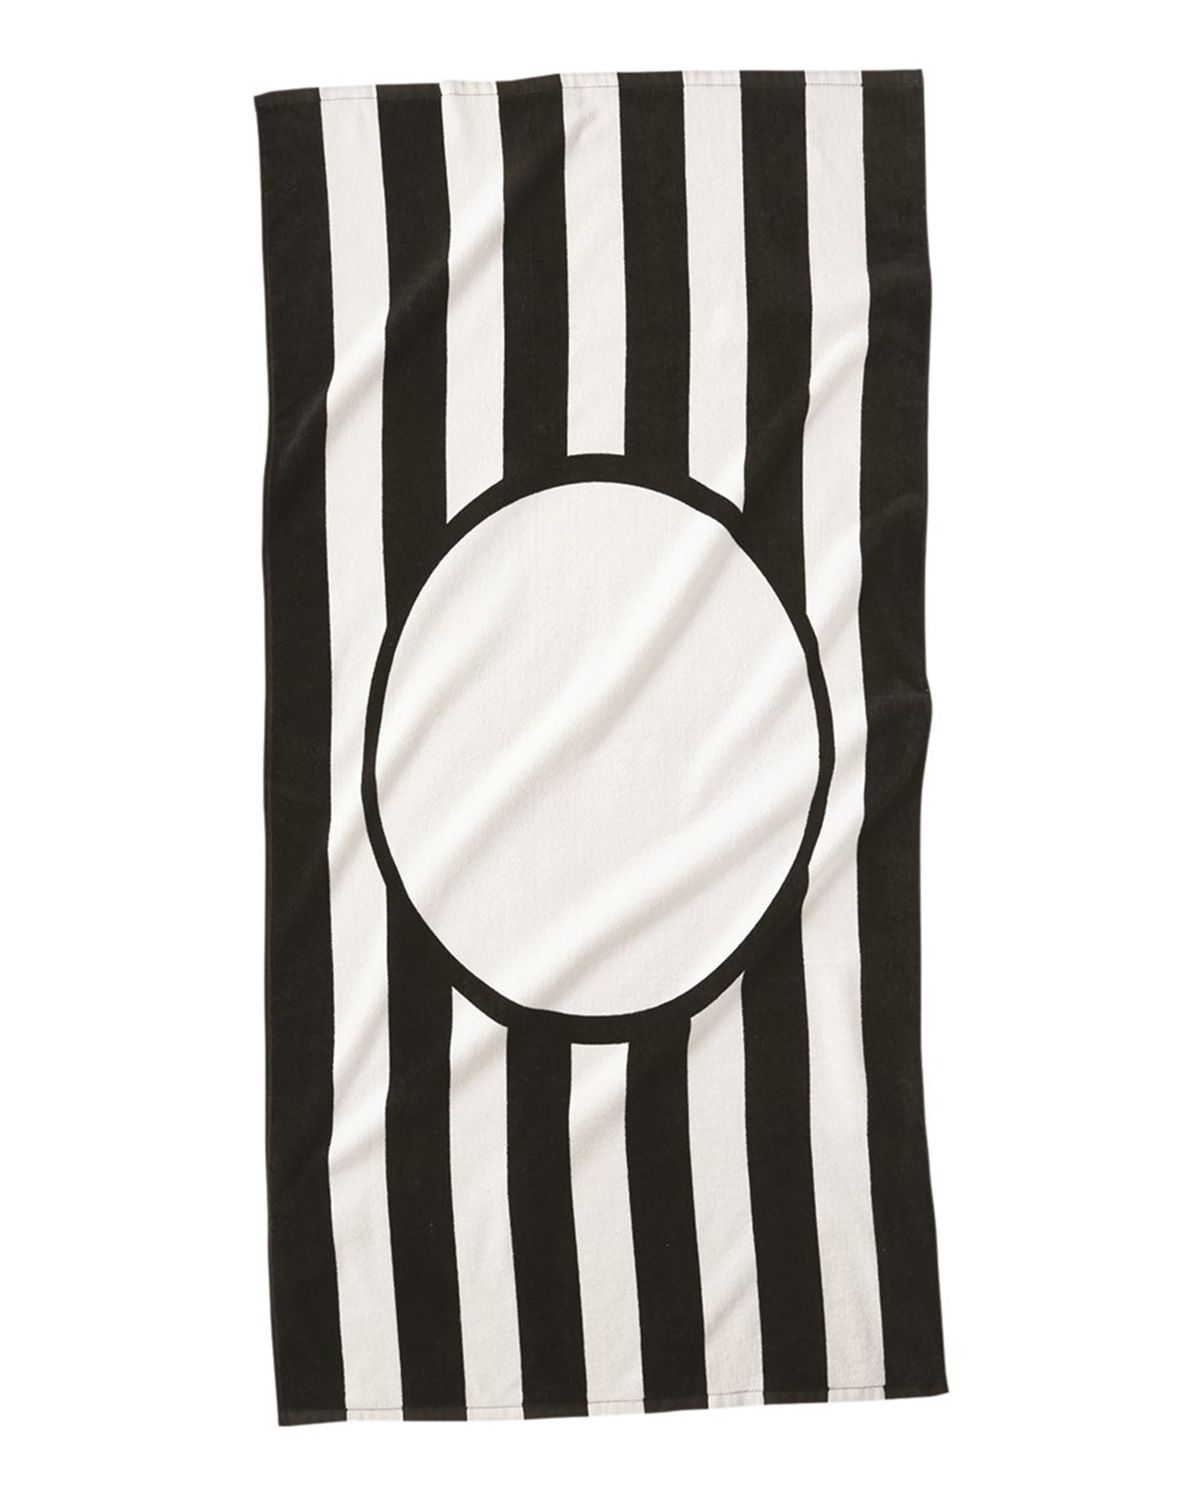 Carmel Towel Company C3060ST Striped Beach Towel